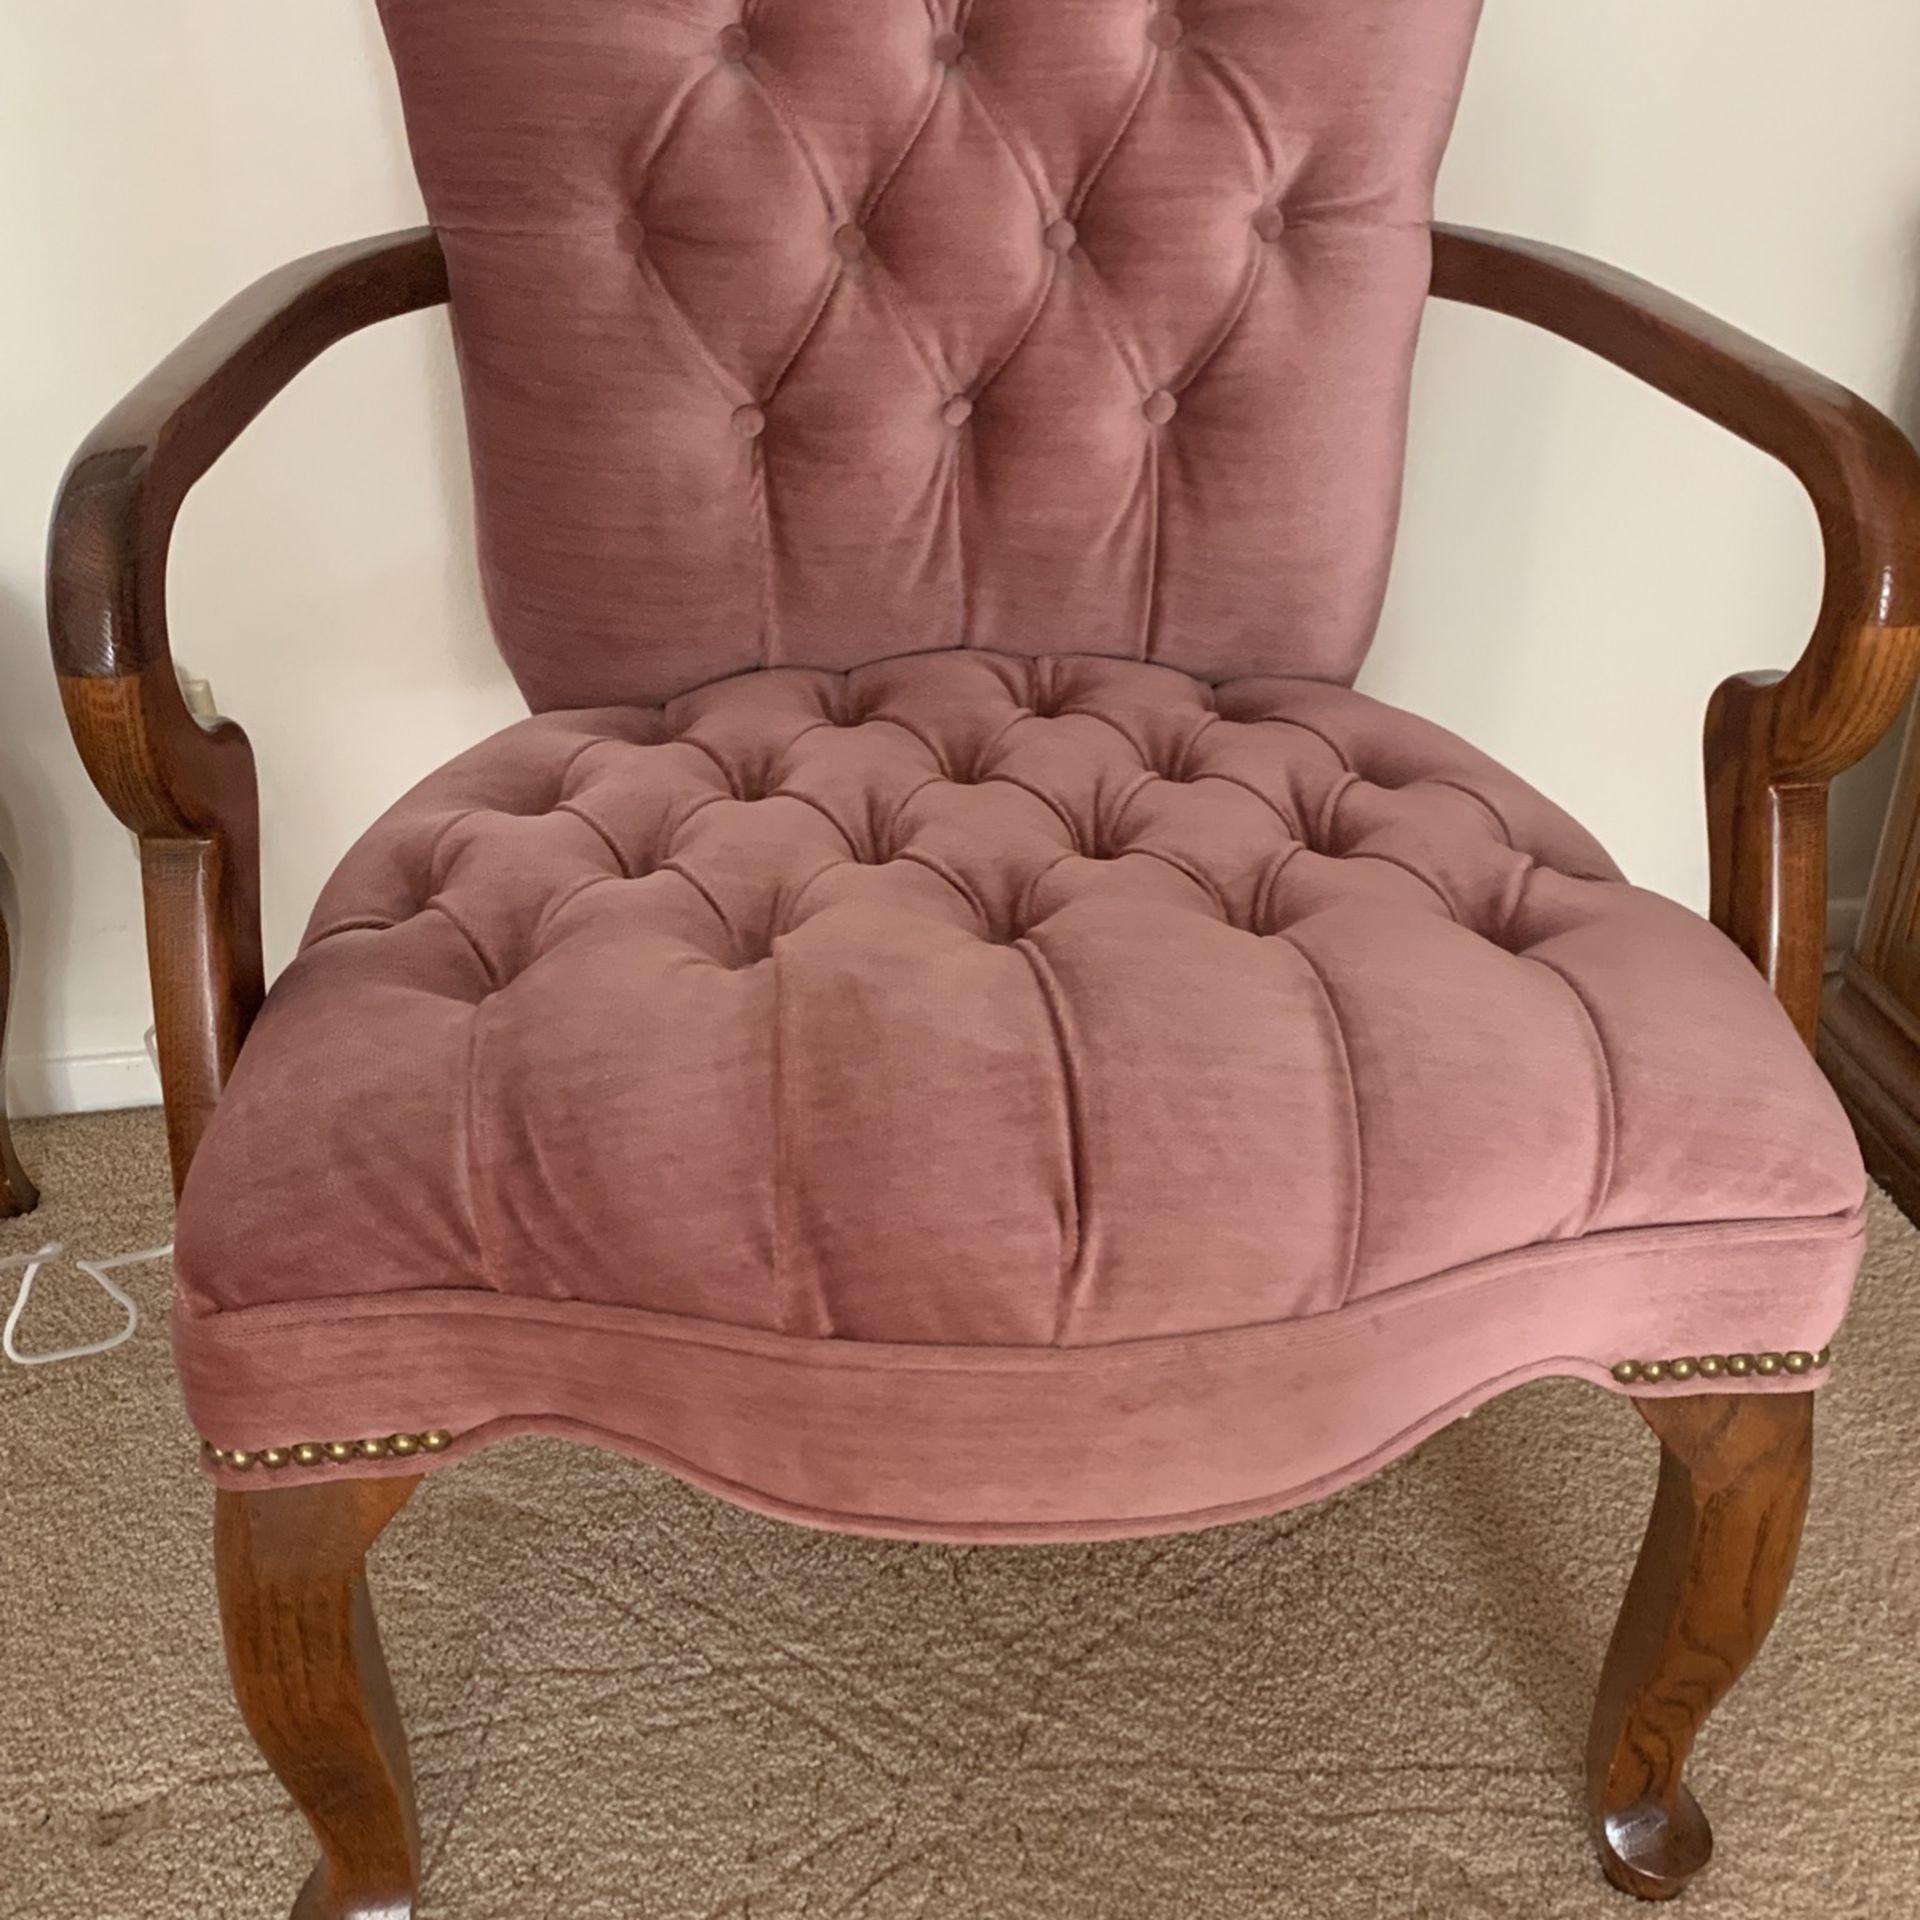 Antique Accent Chair